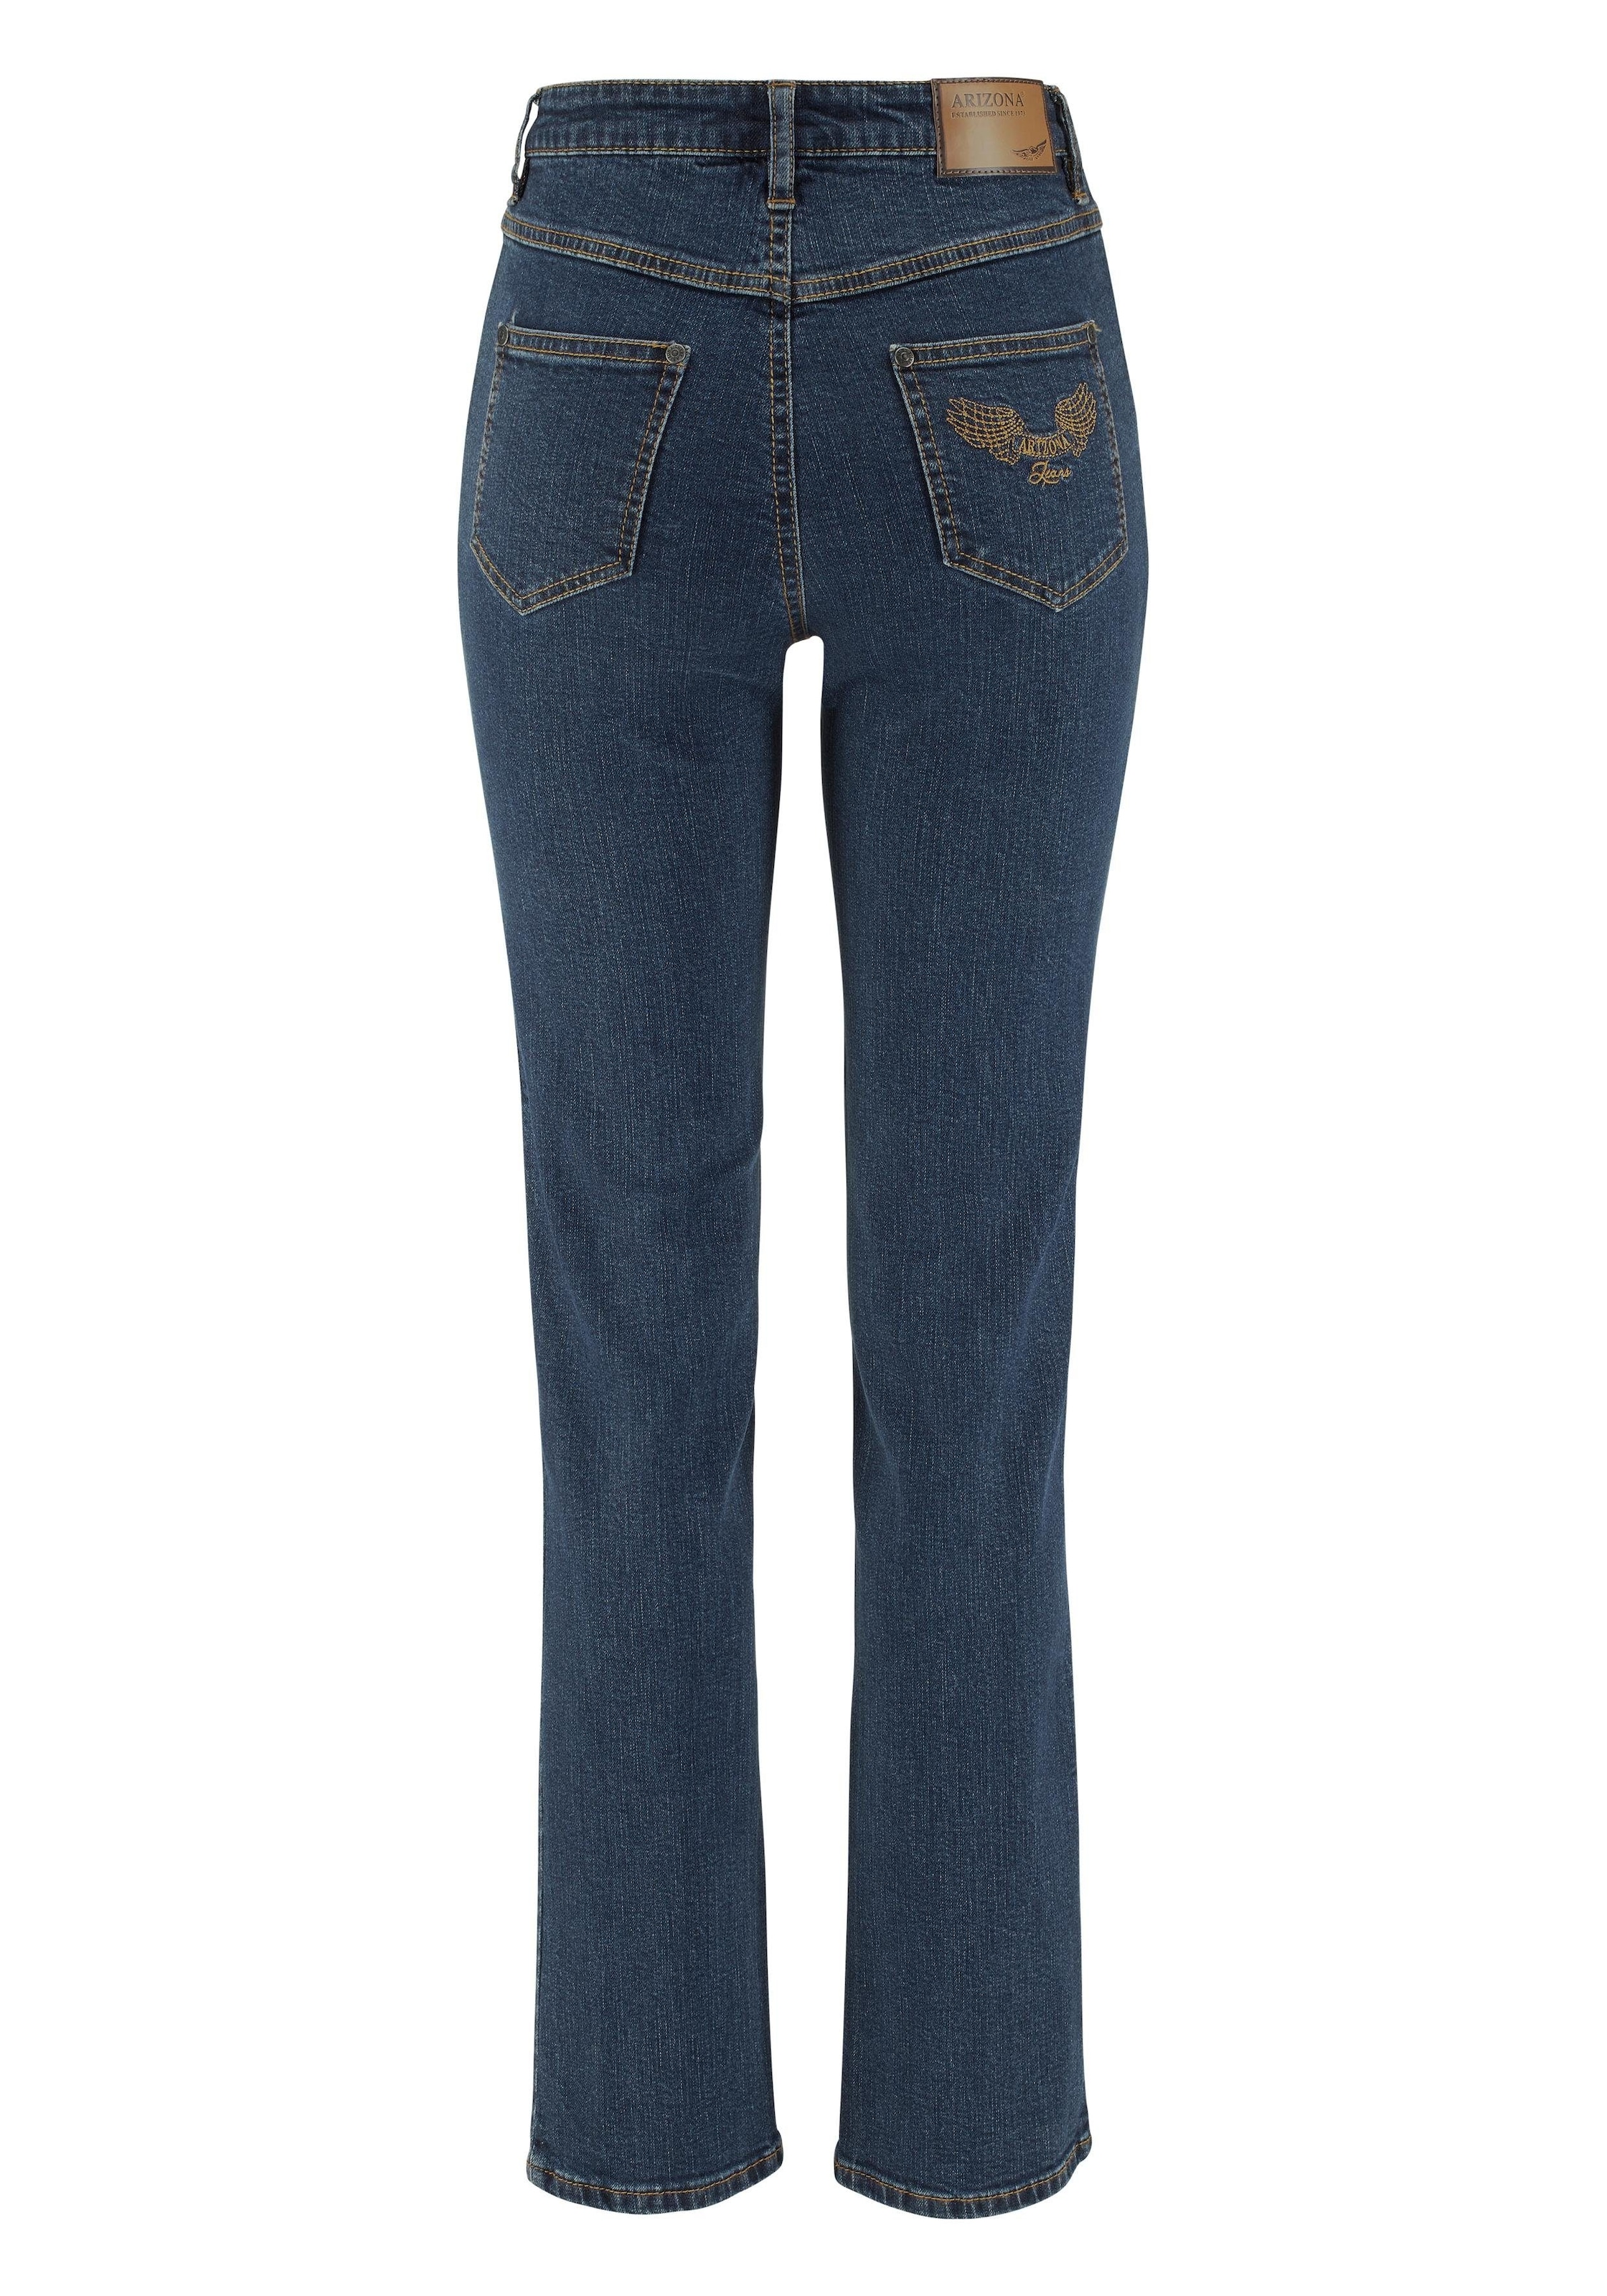 Arizona Gerade Jeans »Comfort-Fit«, High I\'m walking online Waist 